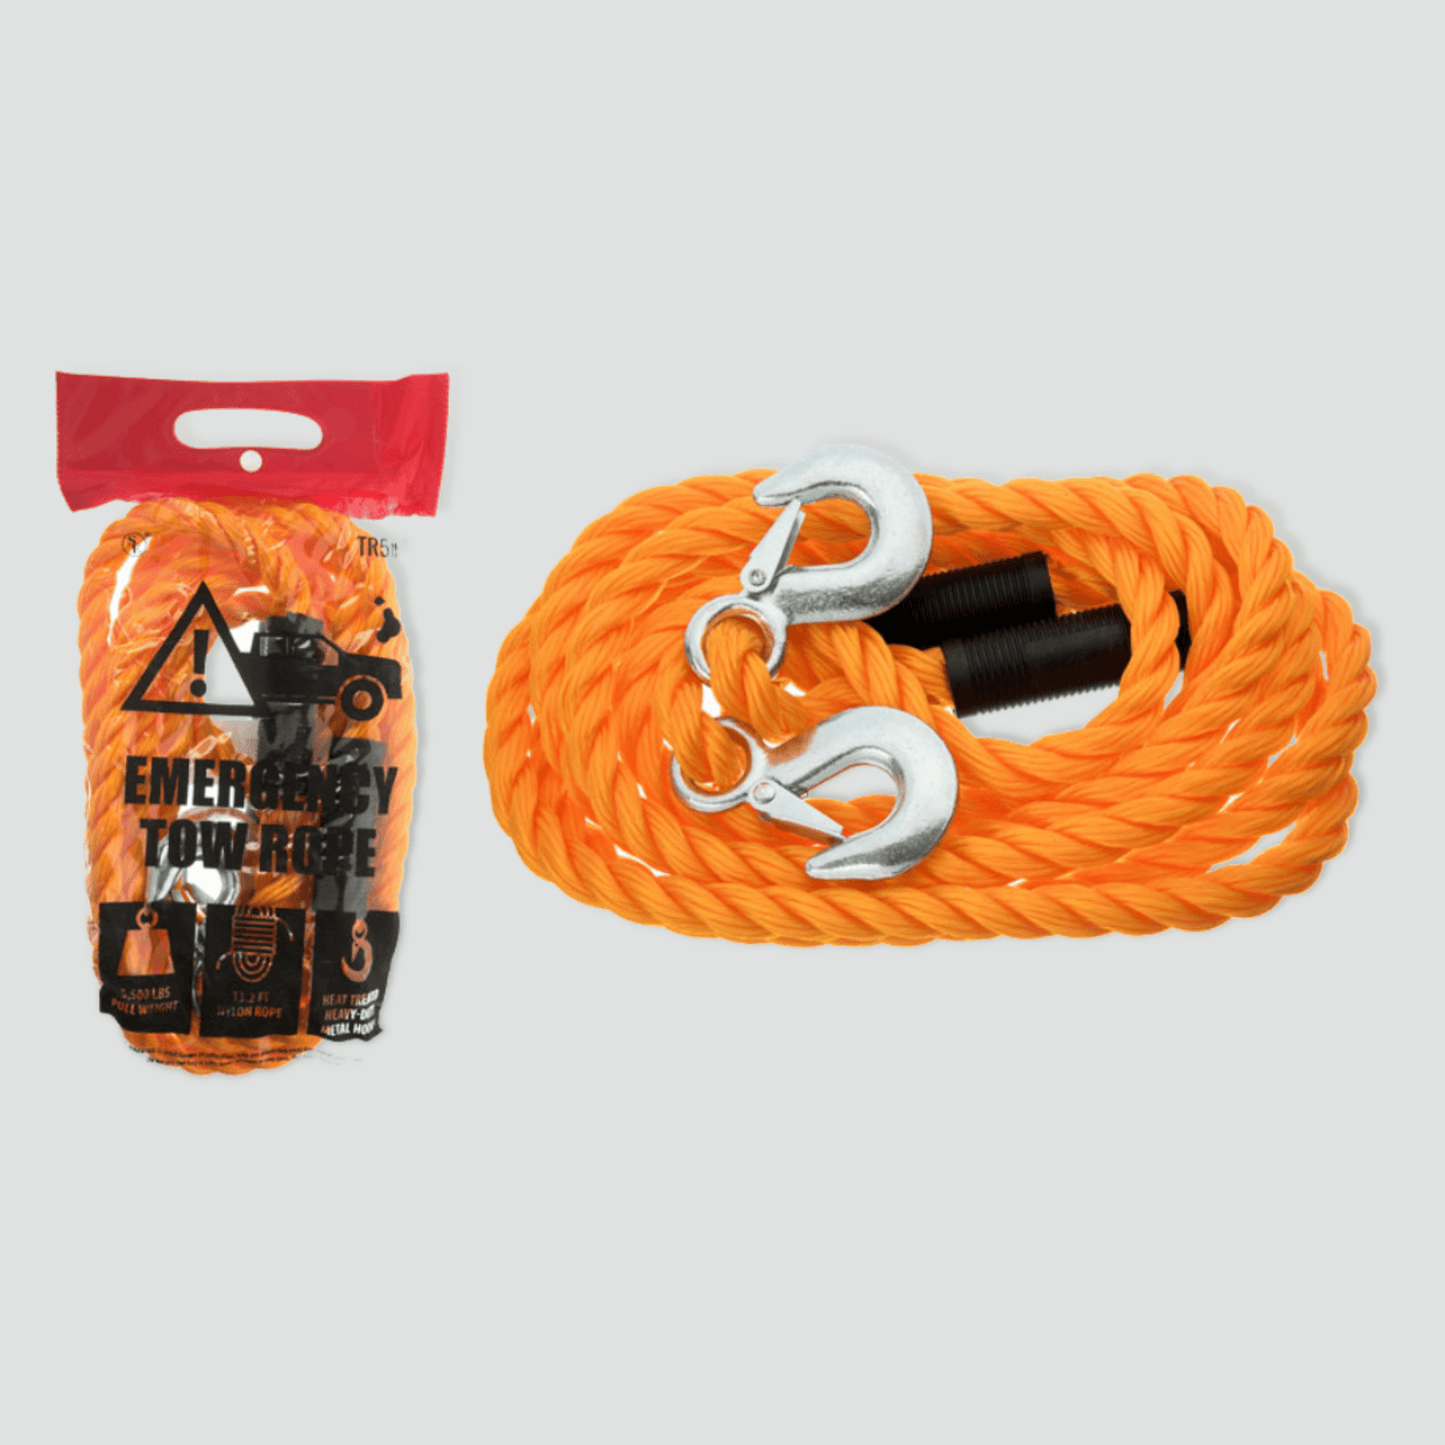 13.2 inch bright orange toe rope in package